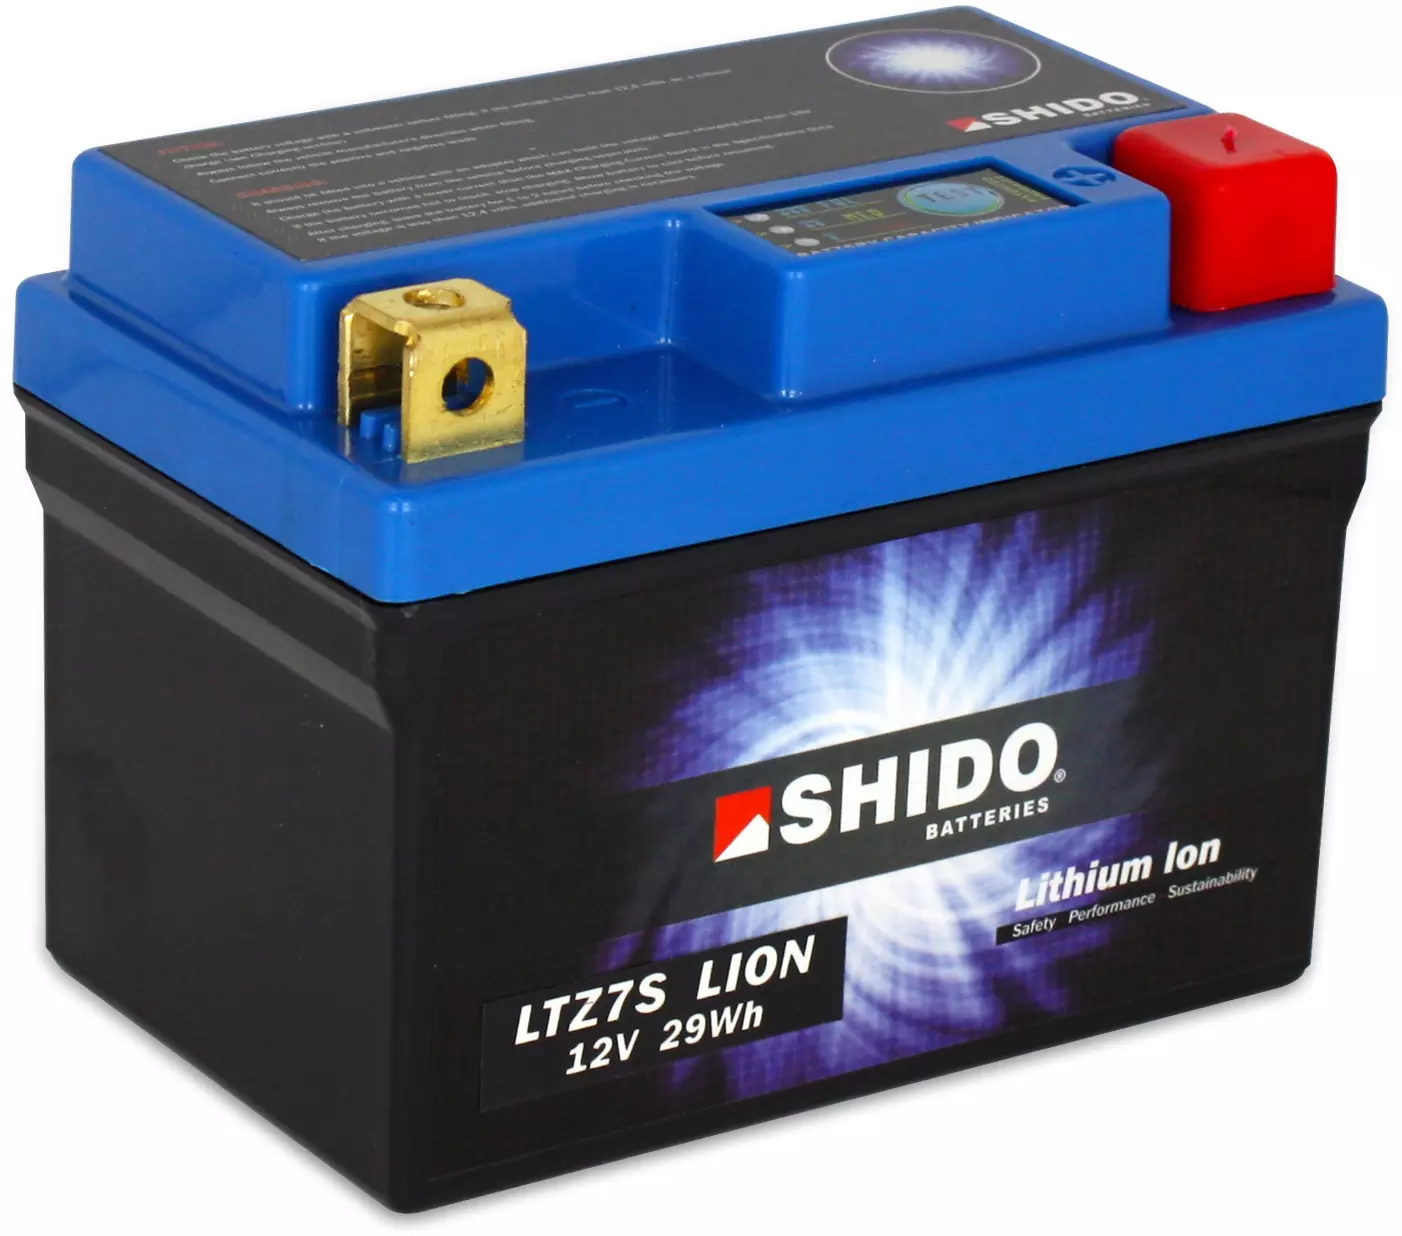 Shido Lithium-Ionen Batterie YTZ10S